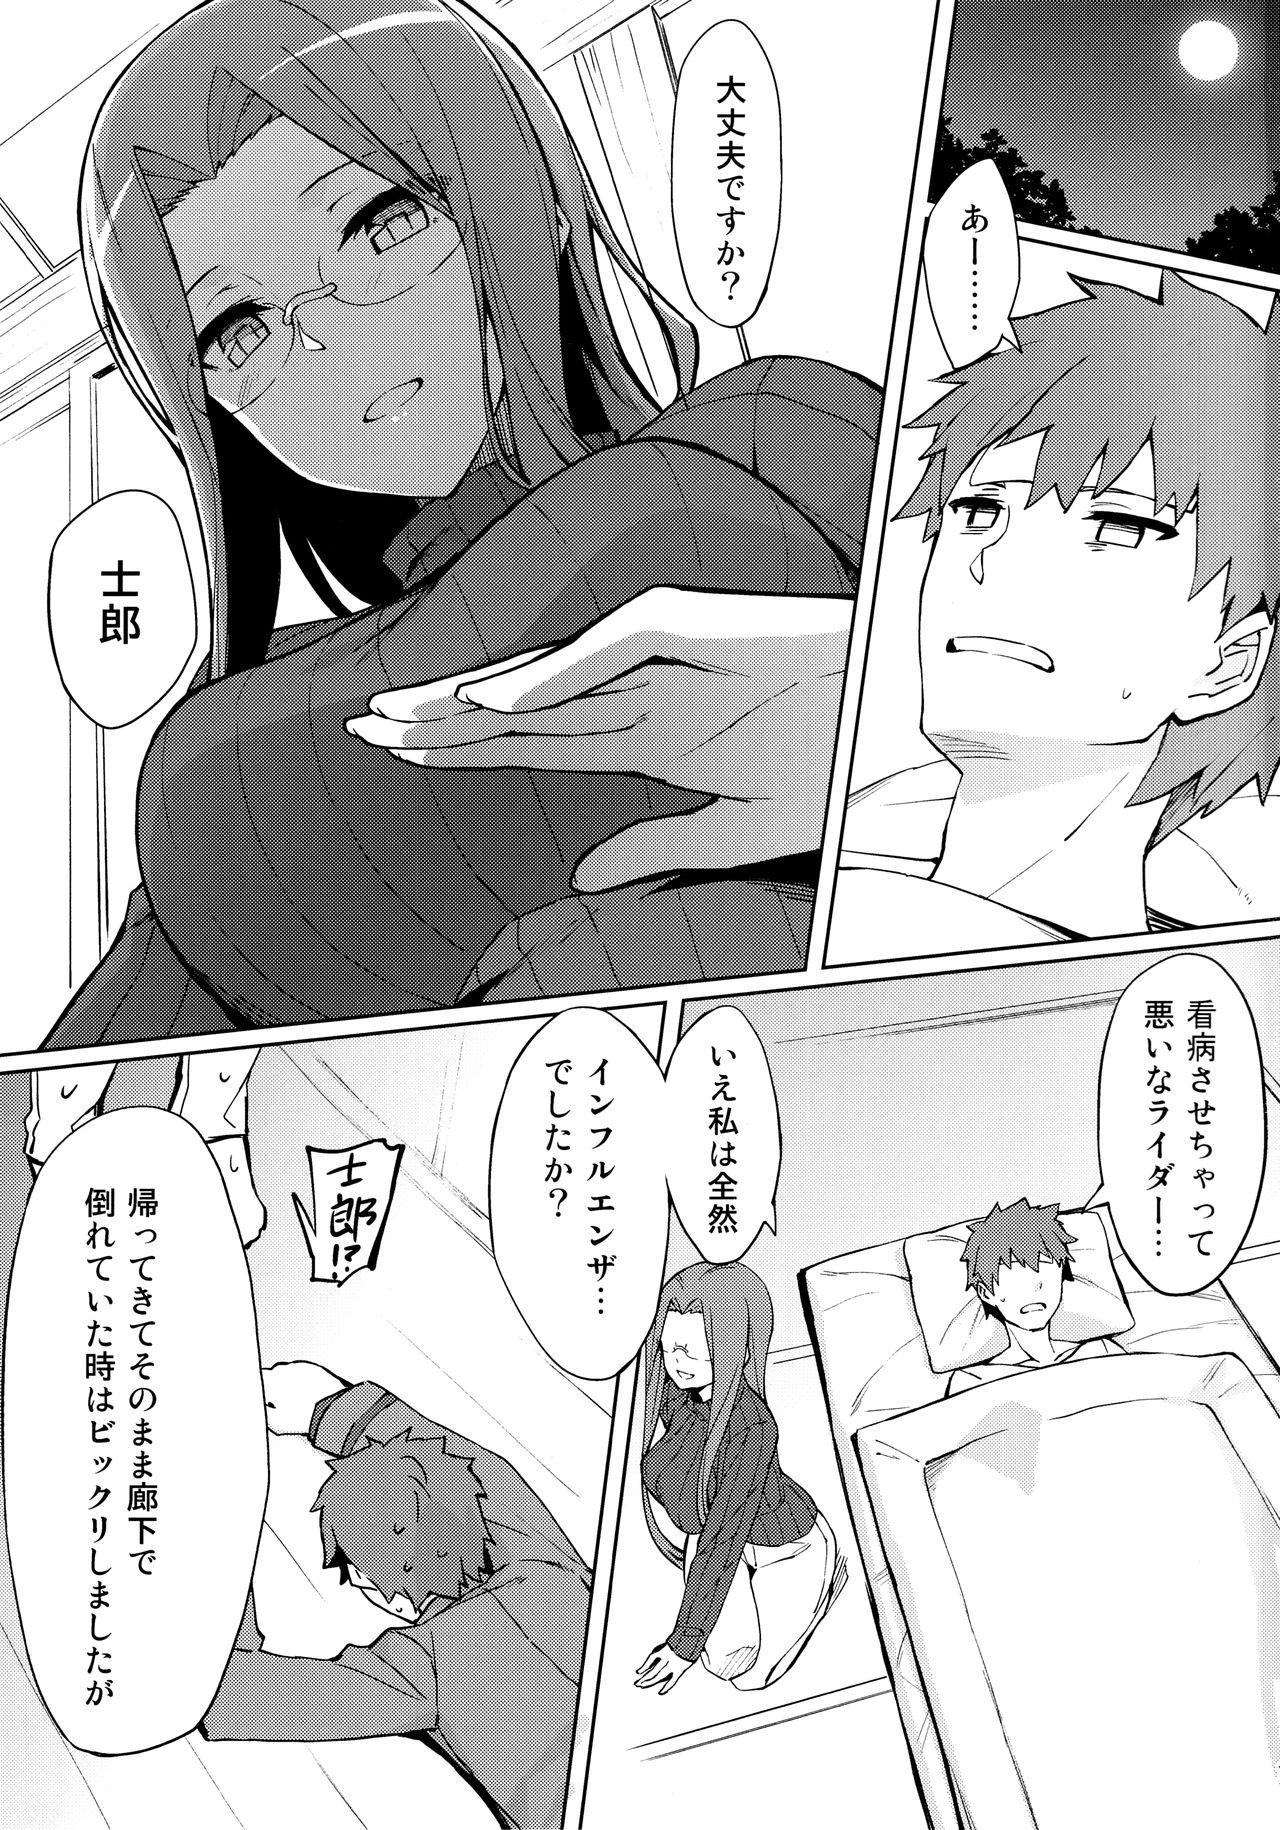 Pelada Rider-san no Kanbyou. - Fate stay night Friend - Page 2